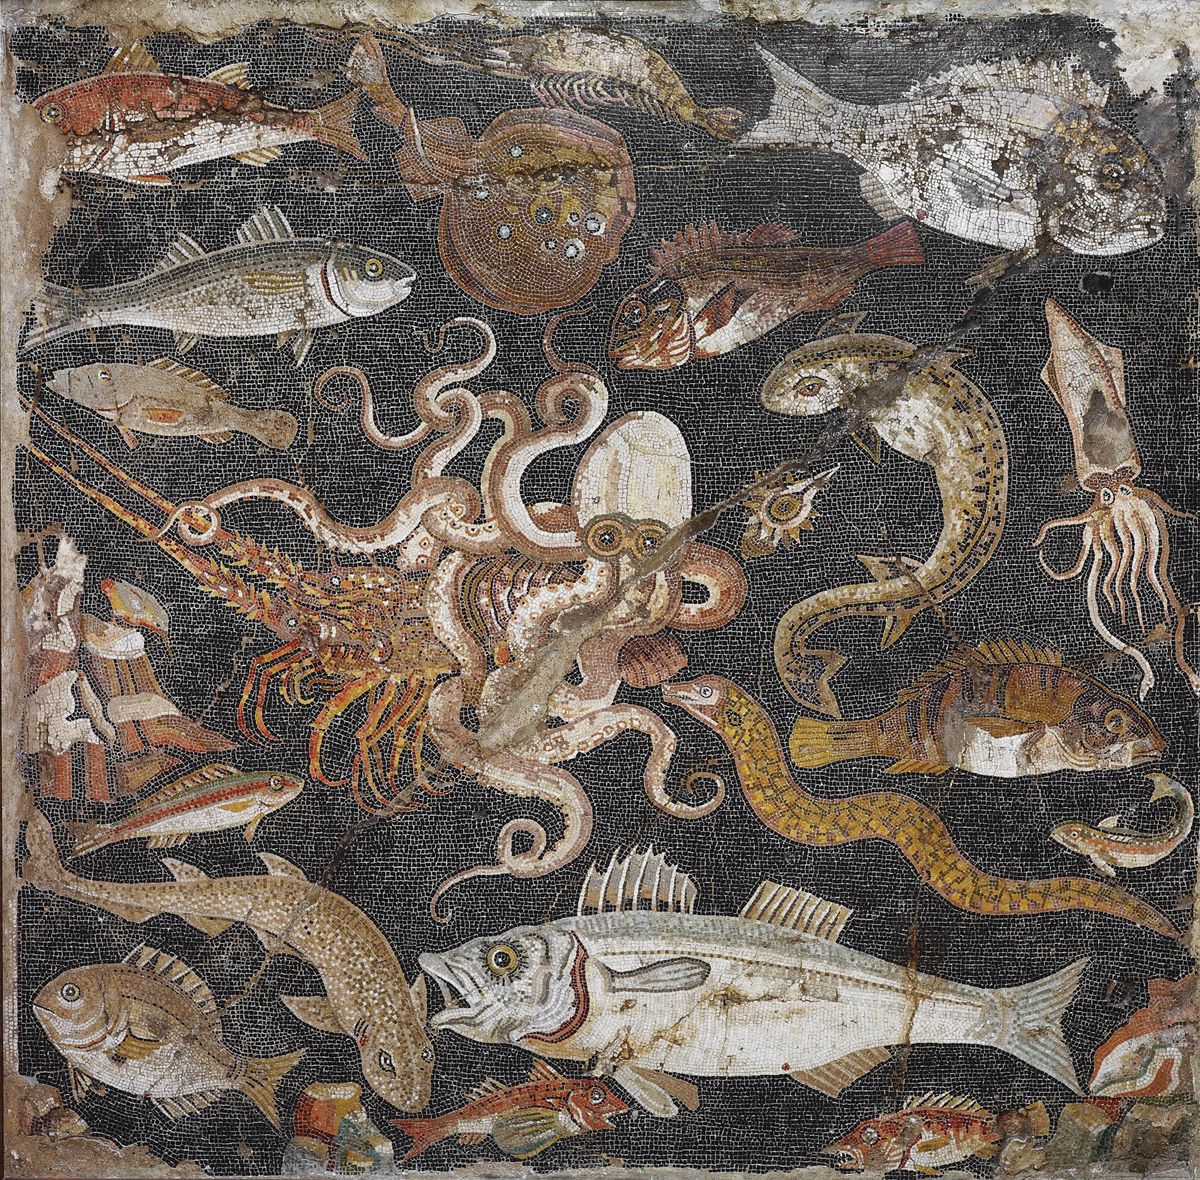 Polychrome mosaic emblema (panel) showing fish and sea creatures (100–1 BC), Pompeii © Museo Archeologico Nazionale di Napoli